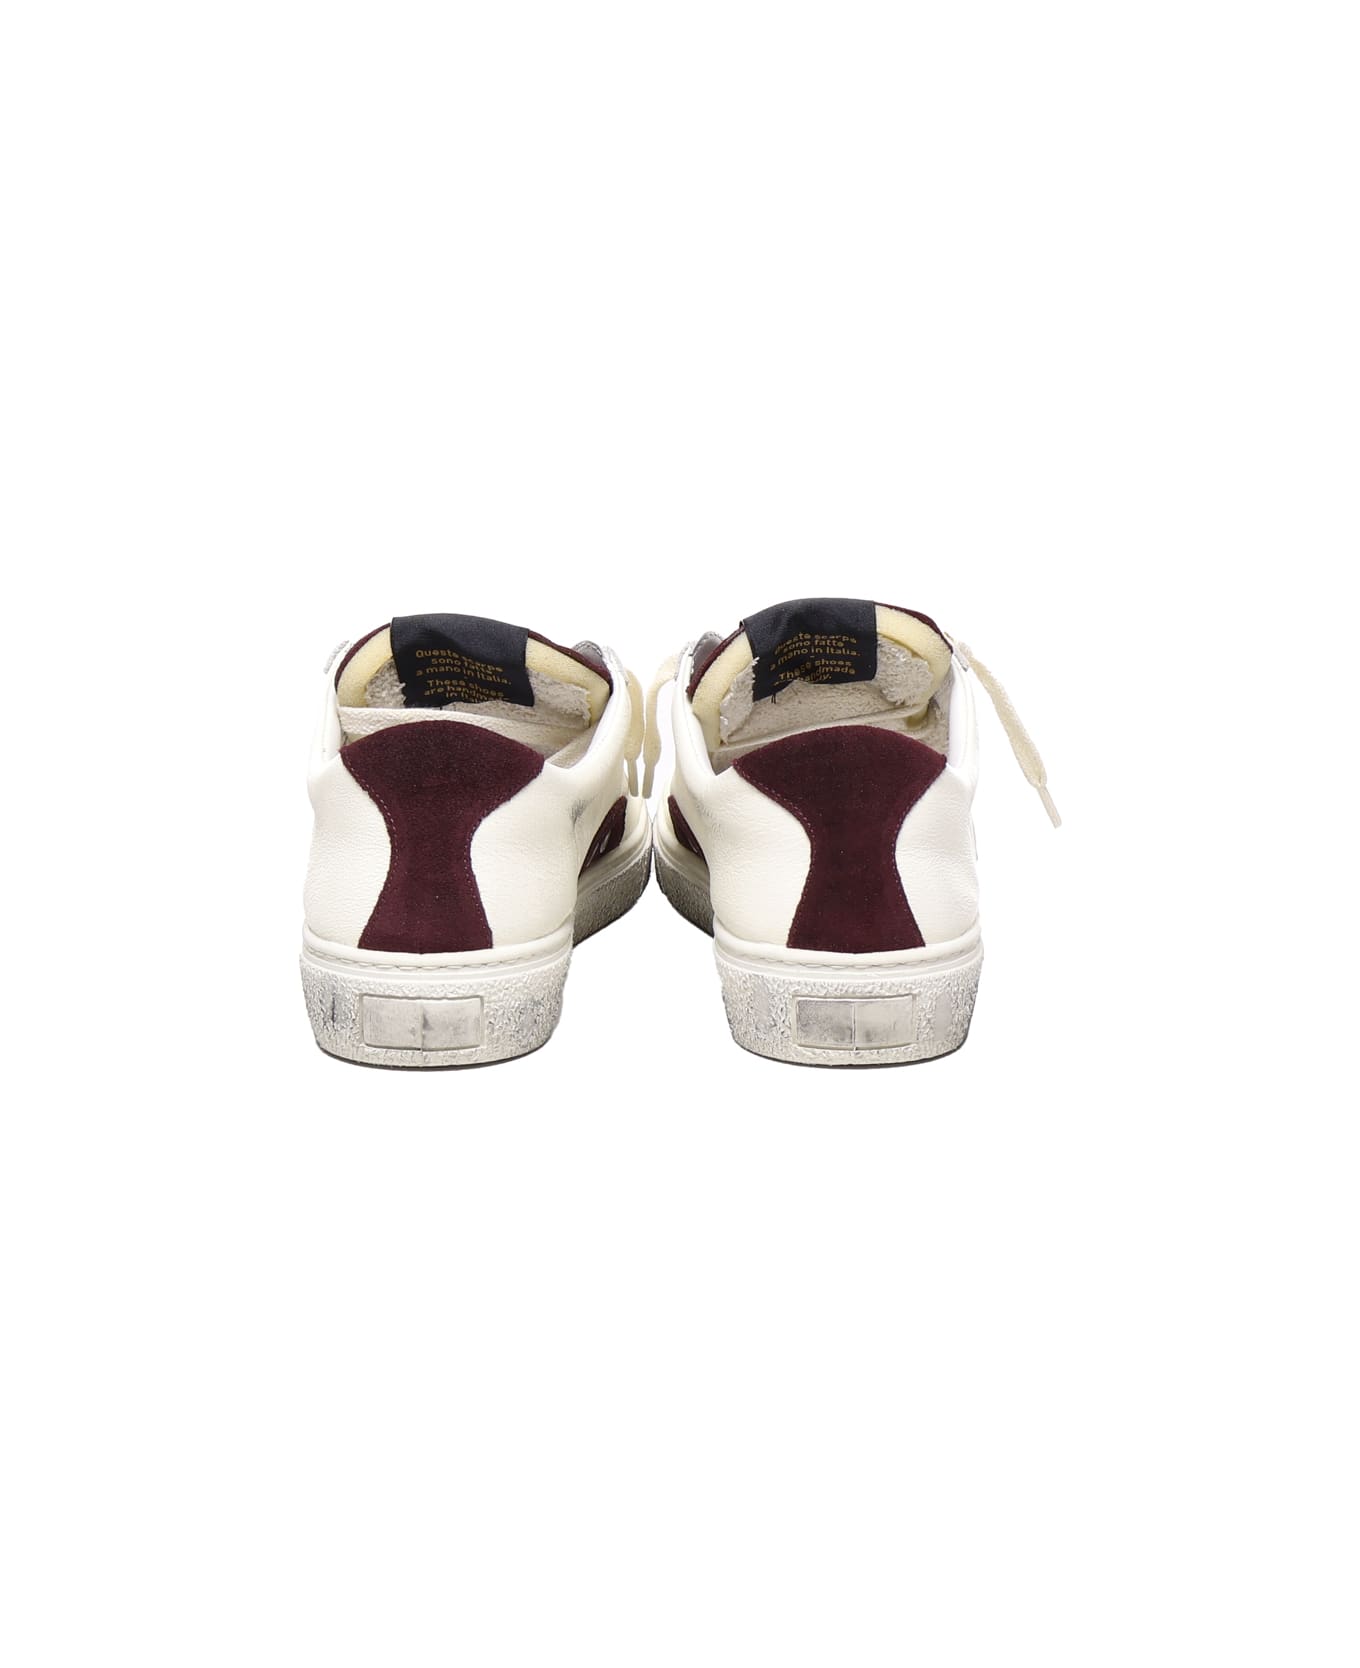 Valsport Ollie Goofy Sneakers - White, bordeaux